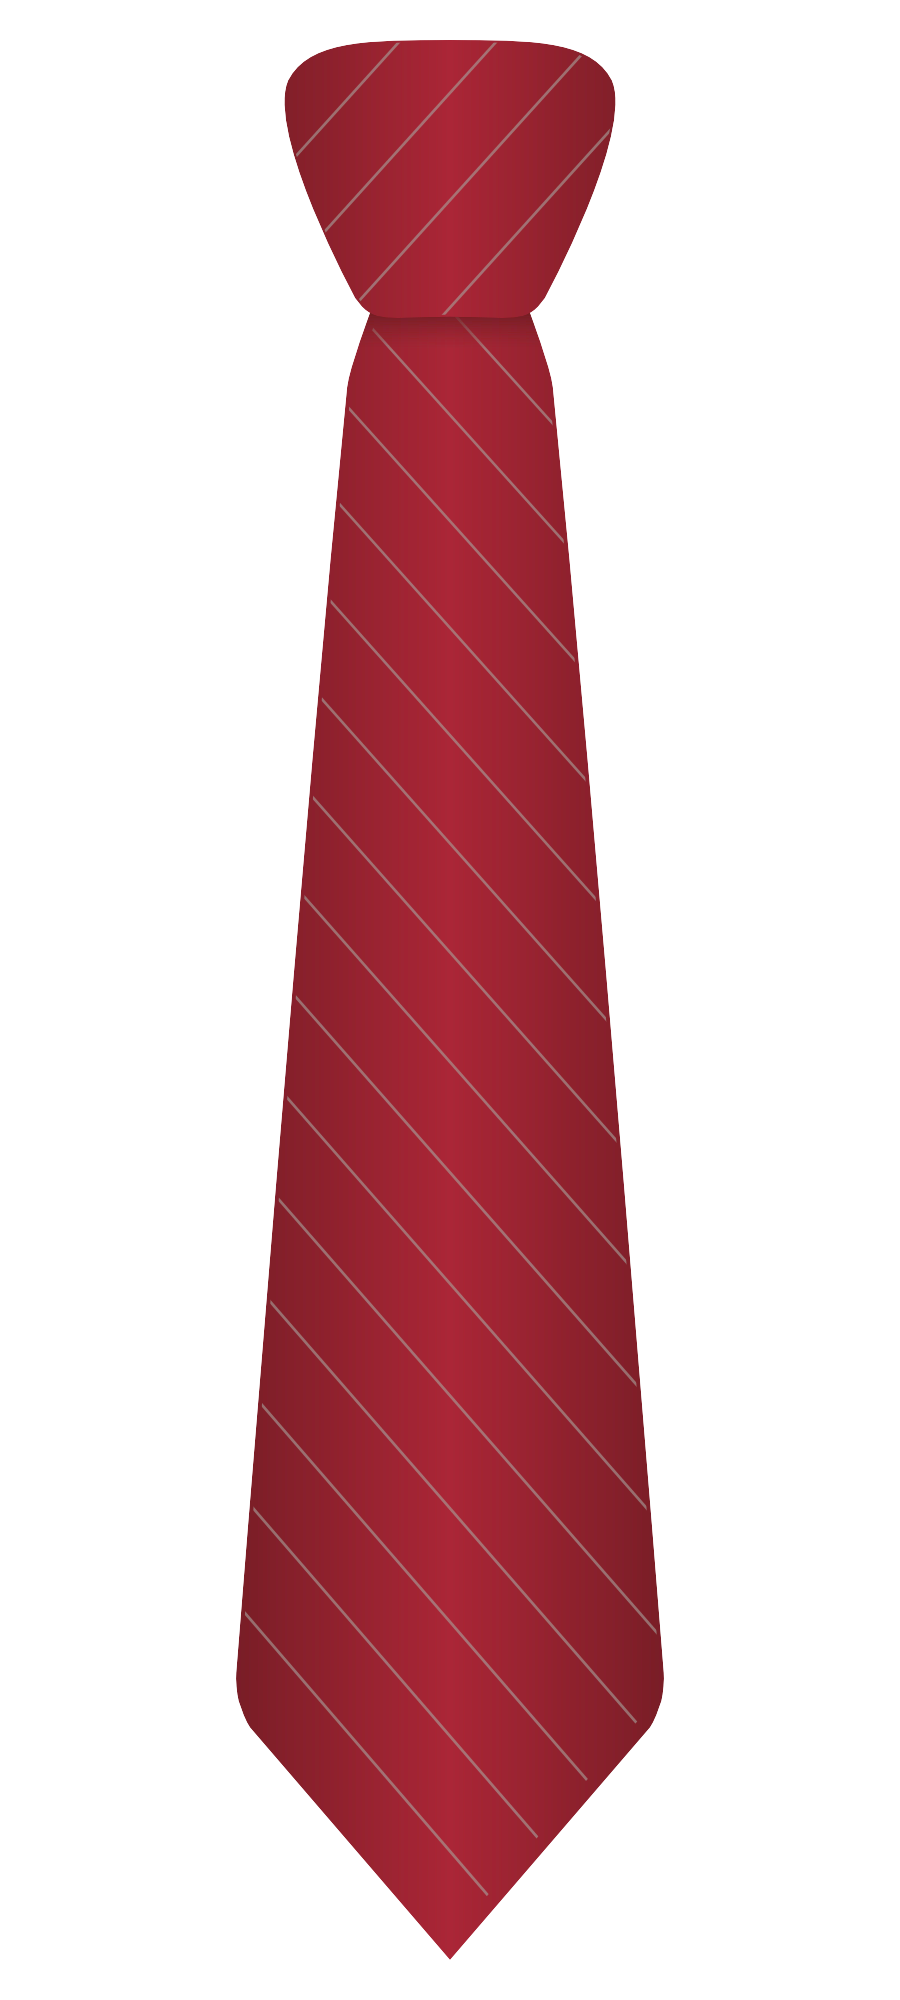 Necktie PNG Transparent Image, PNG Necktie - Free PNG